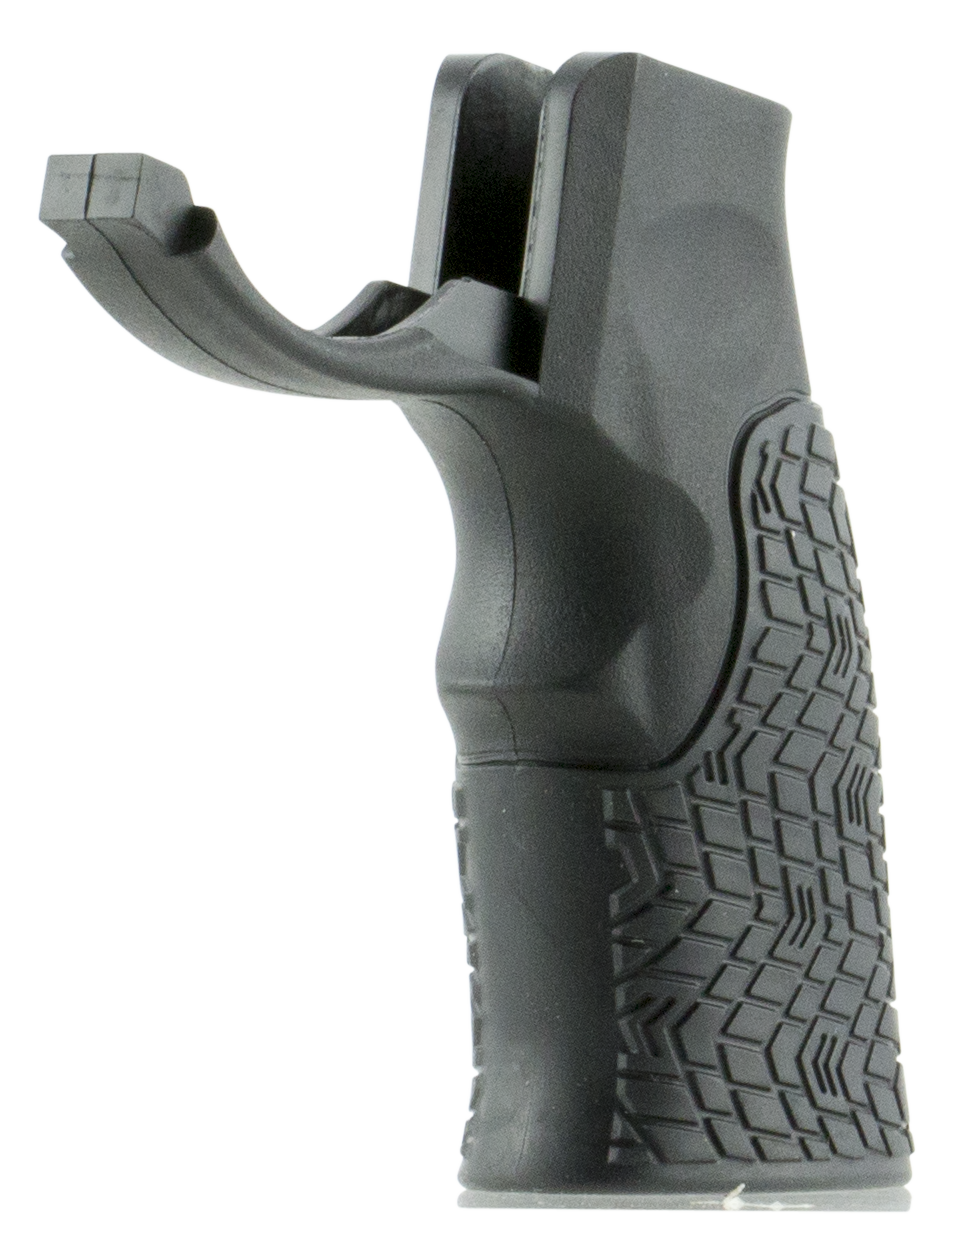 Daniel Def. Grip Ar-15 Black - With Integrated Trigger Guard